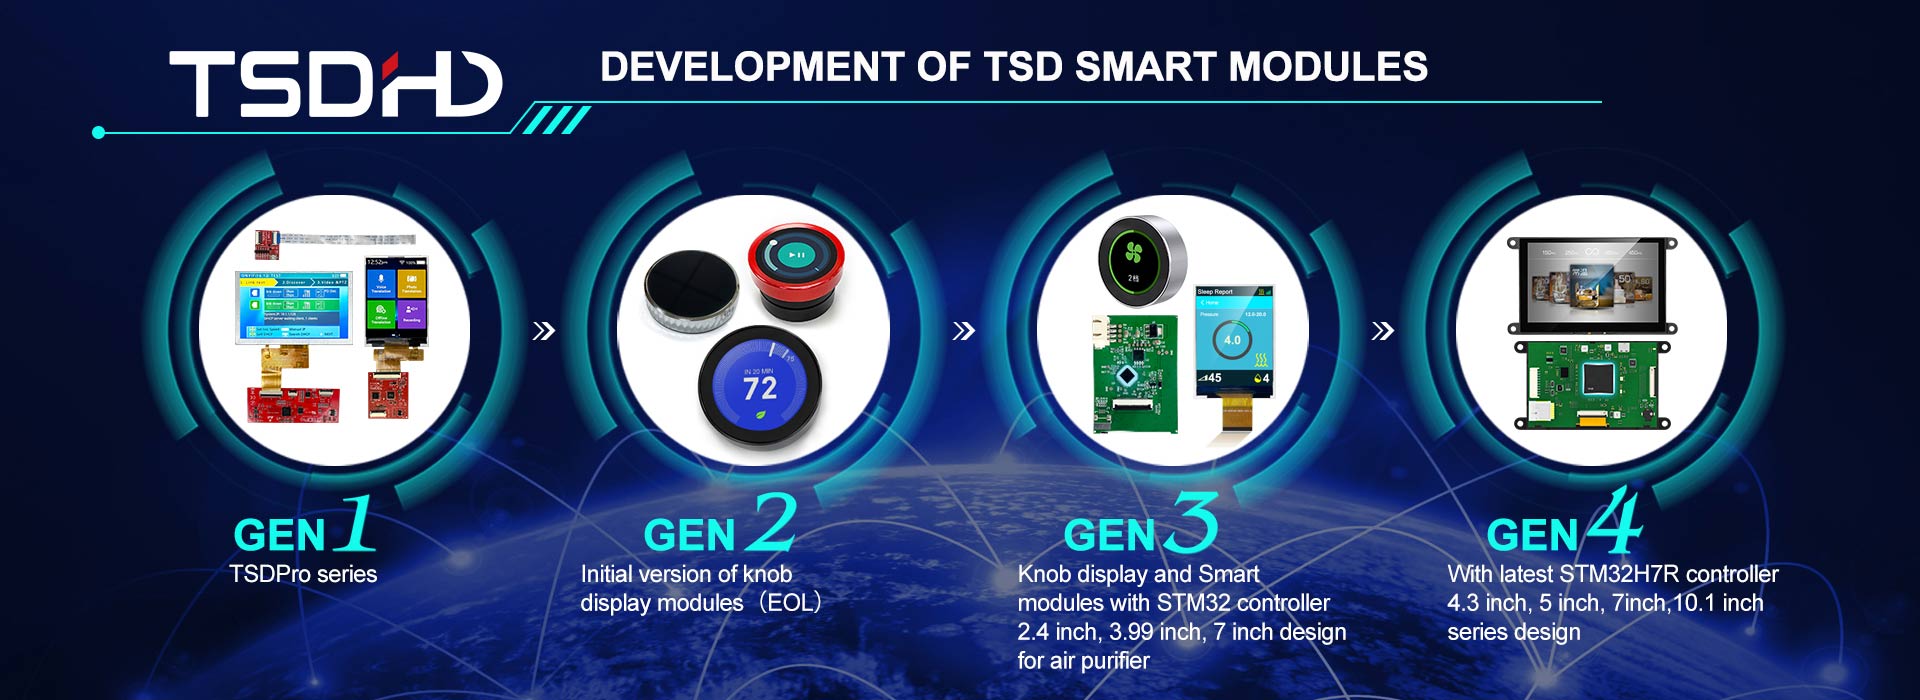 Development path of TSD Smart Modules